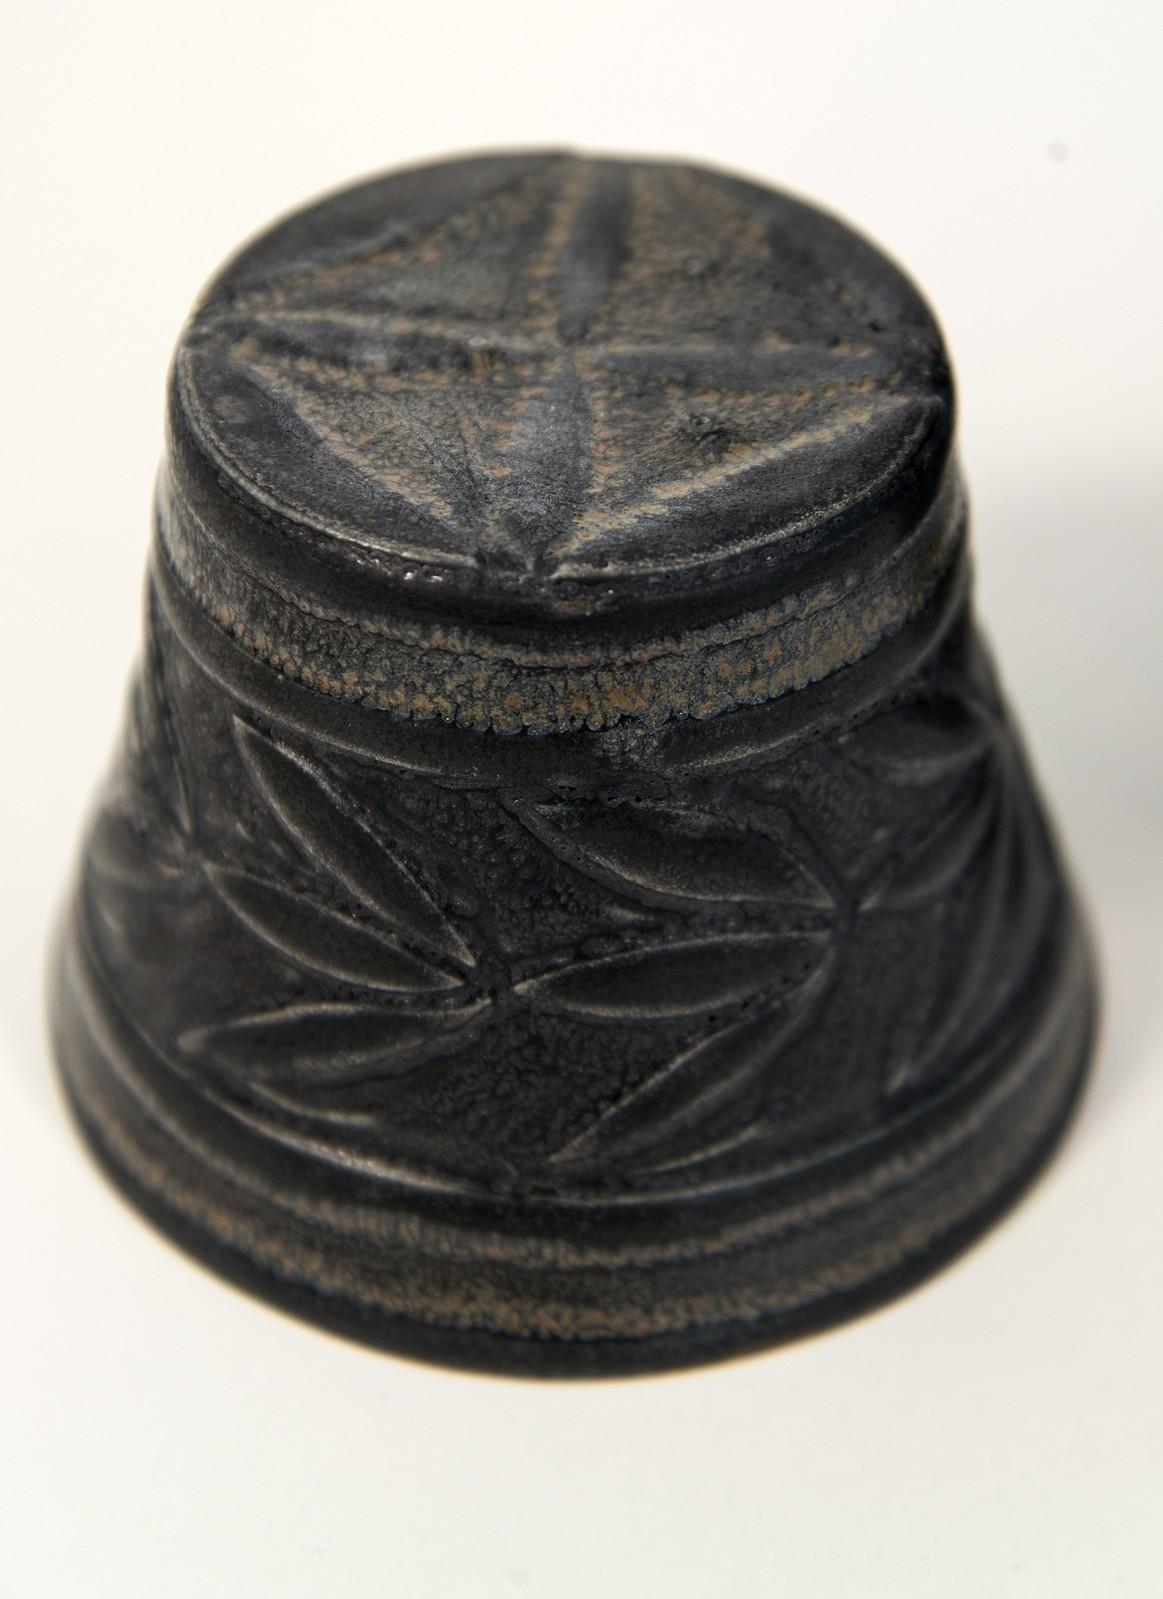 Small Black & Umber Ginger Jar with Engraved Leaves - porcelain vessel - Contemporary Sculpture by Loren Kaplan